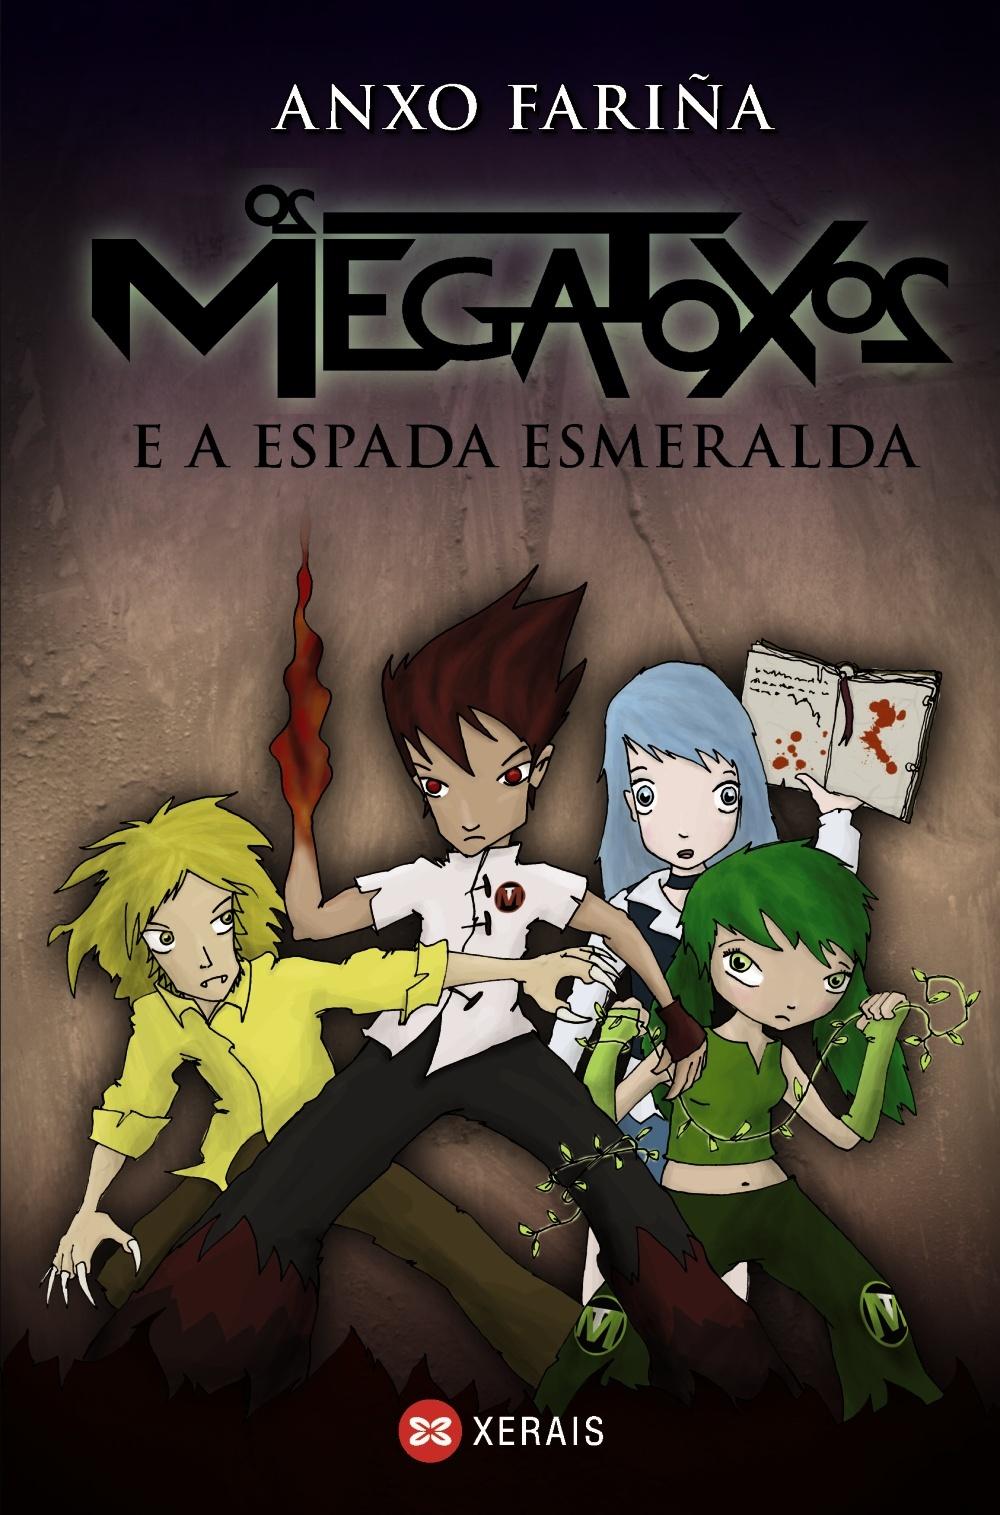 Foto Os Megatoxos e a espada esmeralda foto 65953